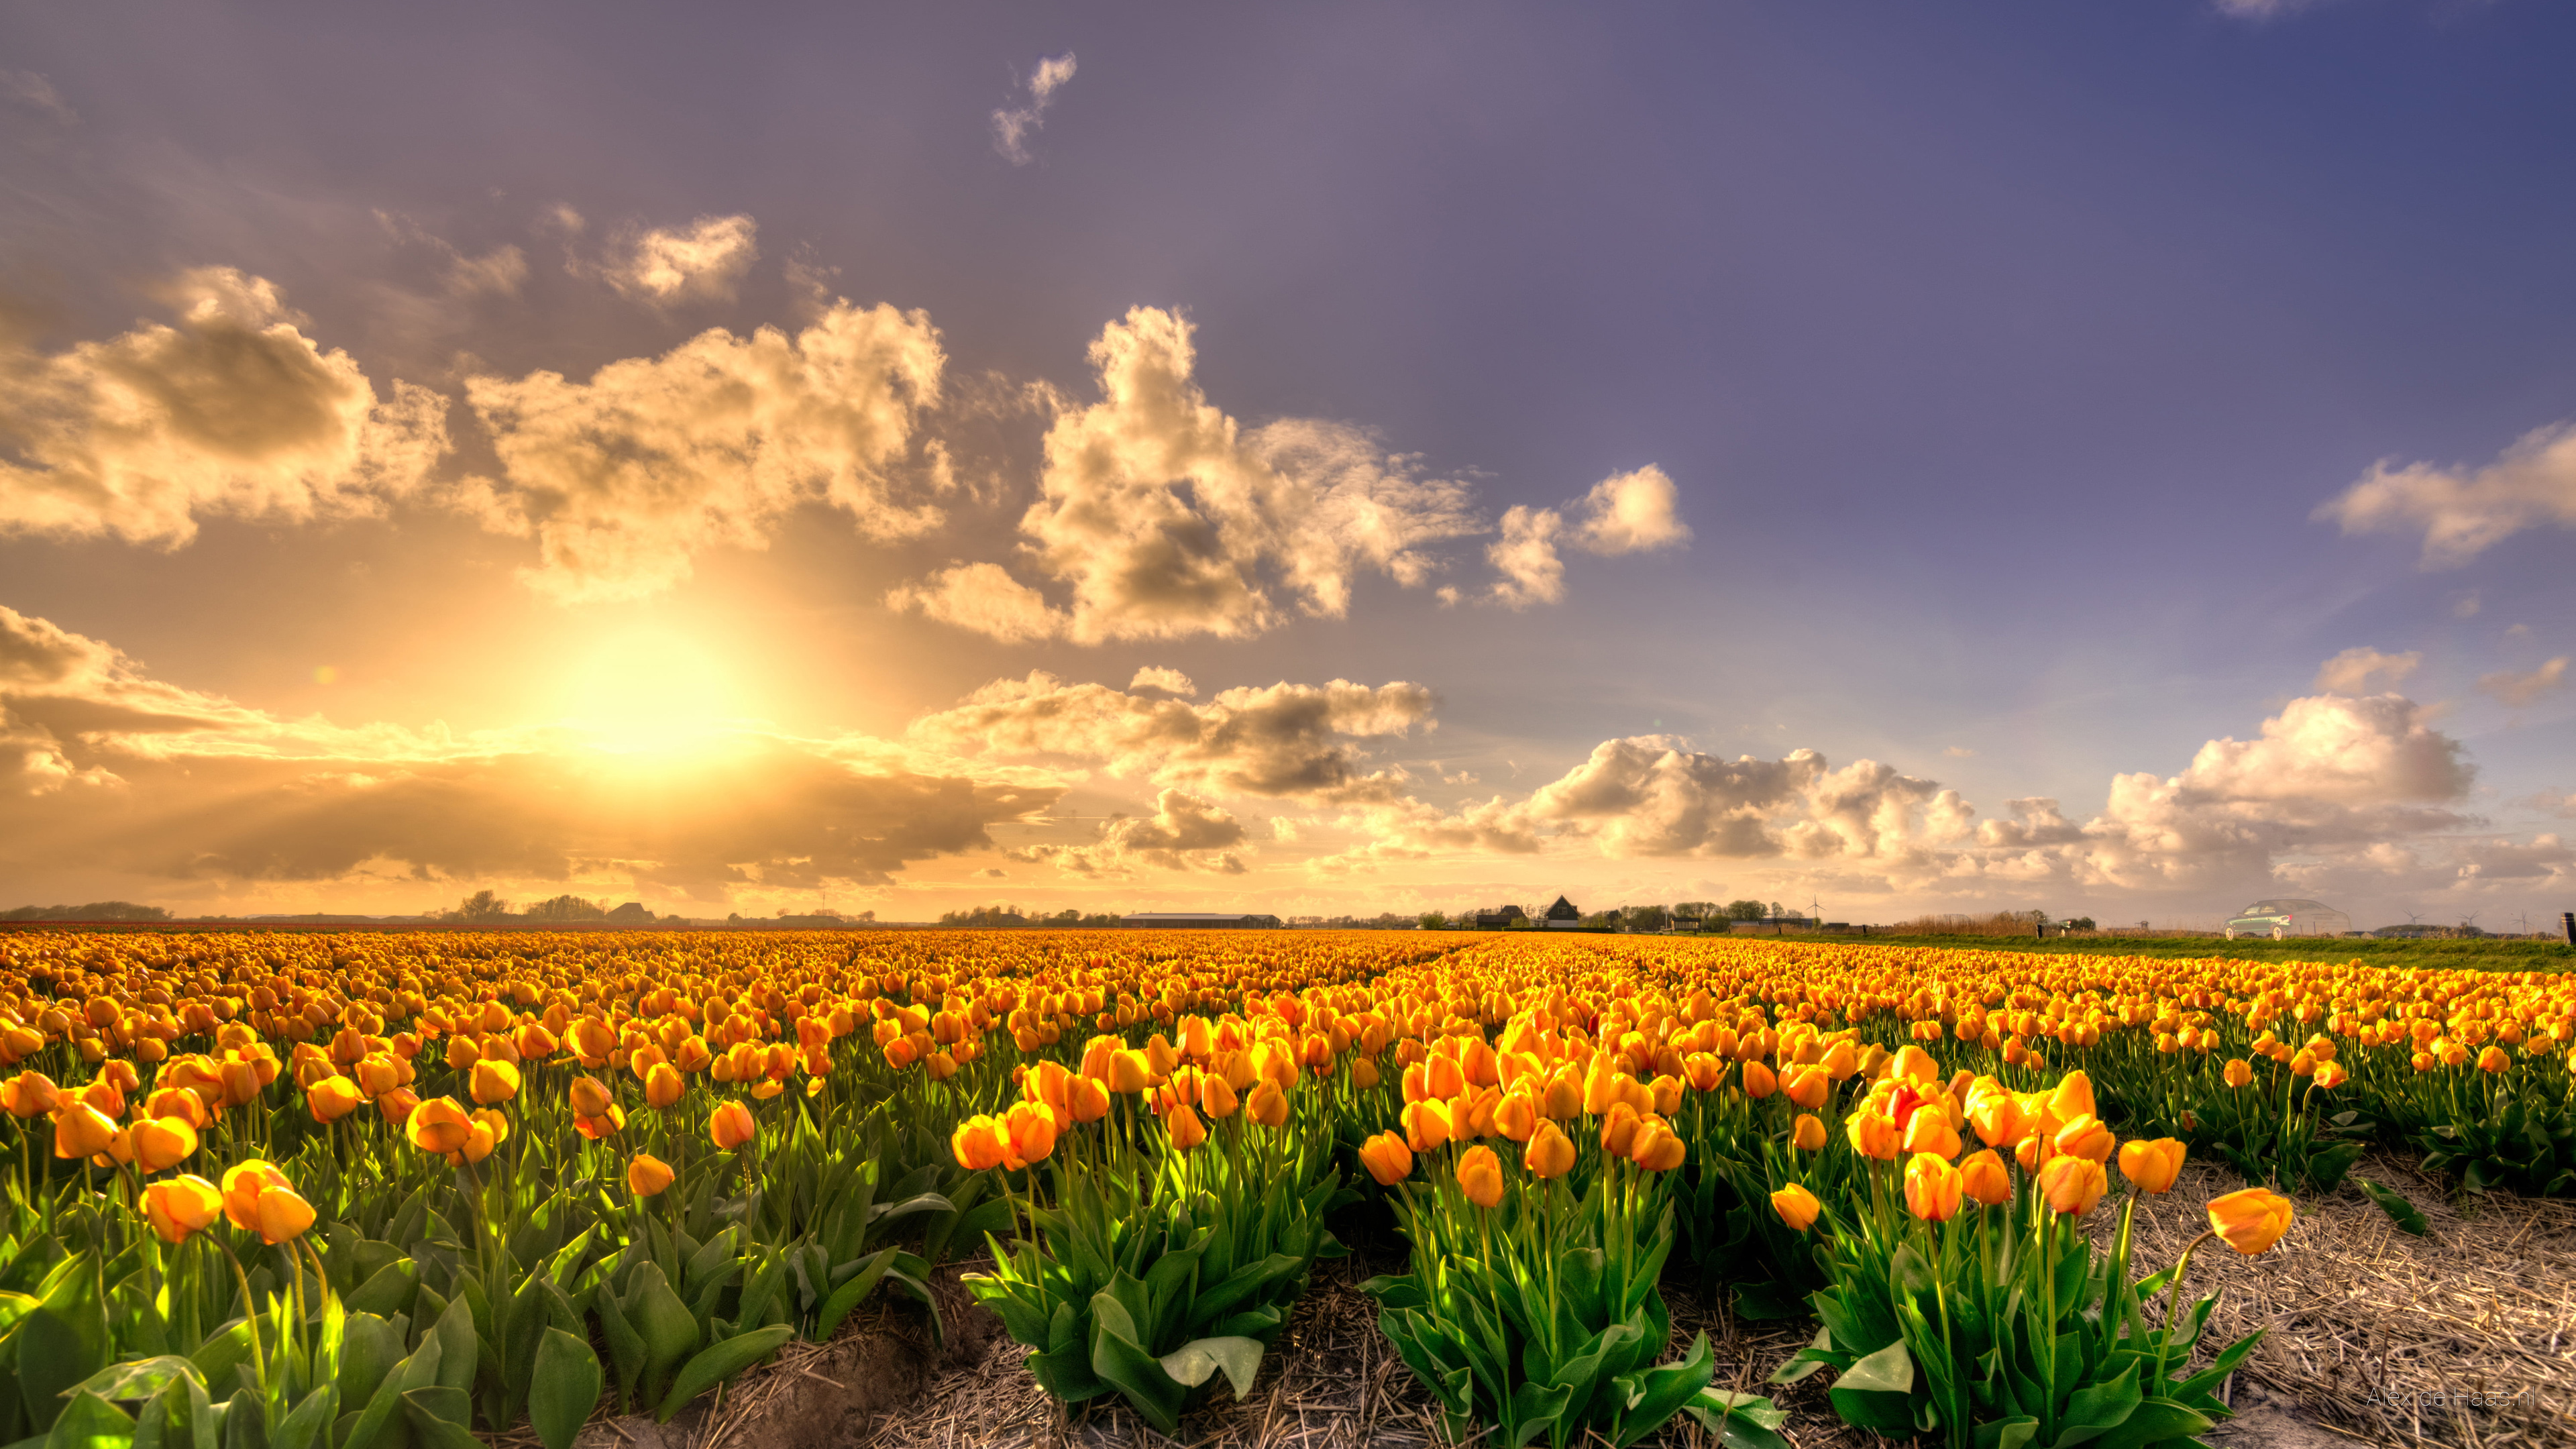 Скачать обои бесплатно Тюльпан, Нидерланды, Желтый Цветок, Земля/природа, Флауэрсы картинка на рабочий стол ПК